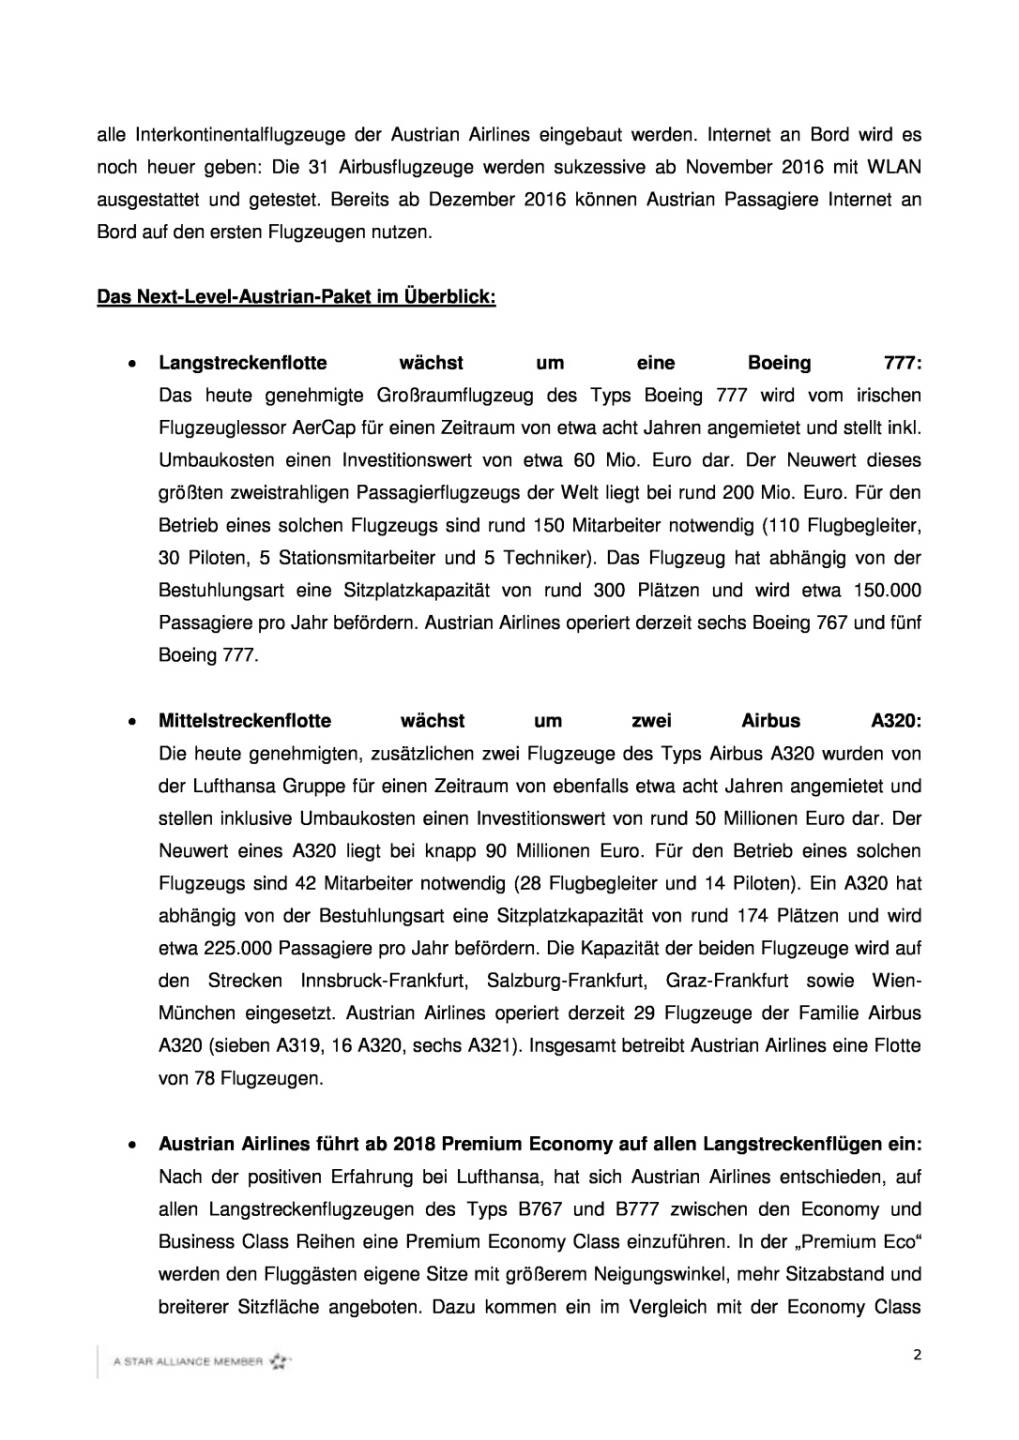 Austrian Airlines investiert in zusätzliche Flugzeuge am Drehkreuz Wien, Seite 2/4, komplettes Dokument unter http://boerse-social.com/static/uploads/file_1853_austrian_airlines_investiert_in_zusatzliche_flugzeuge_am_drehkreuz_wien.pdf